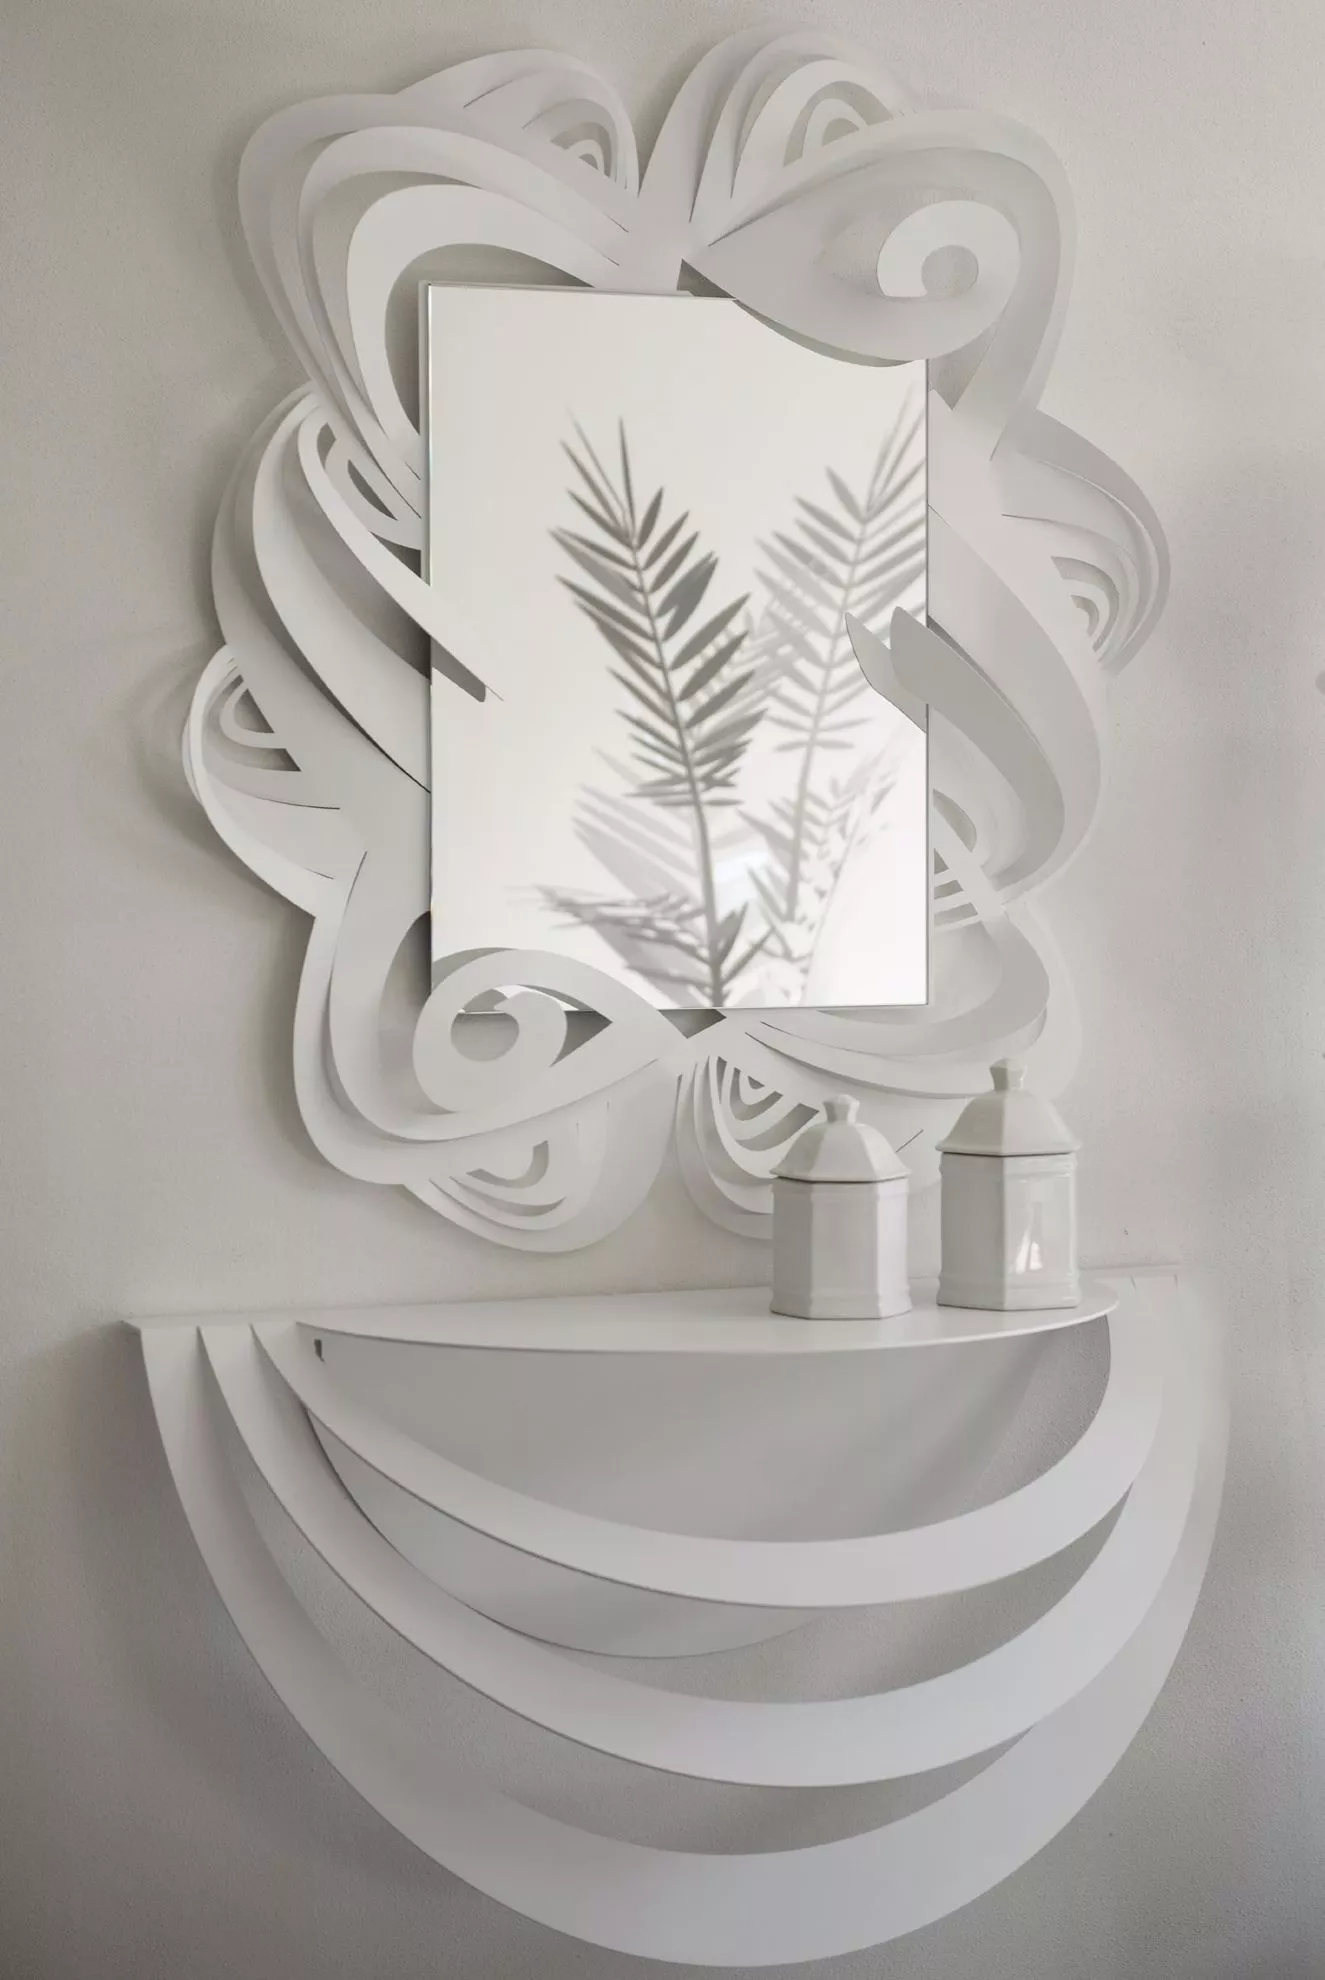 https://www.mazzolaluce.com/images/thumbs/0273553_consolle-da-ingresso-sospesa-e-specchio-da-parete-moderno-metallo-bianco.webp